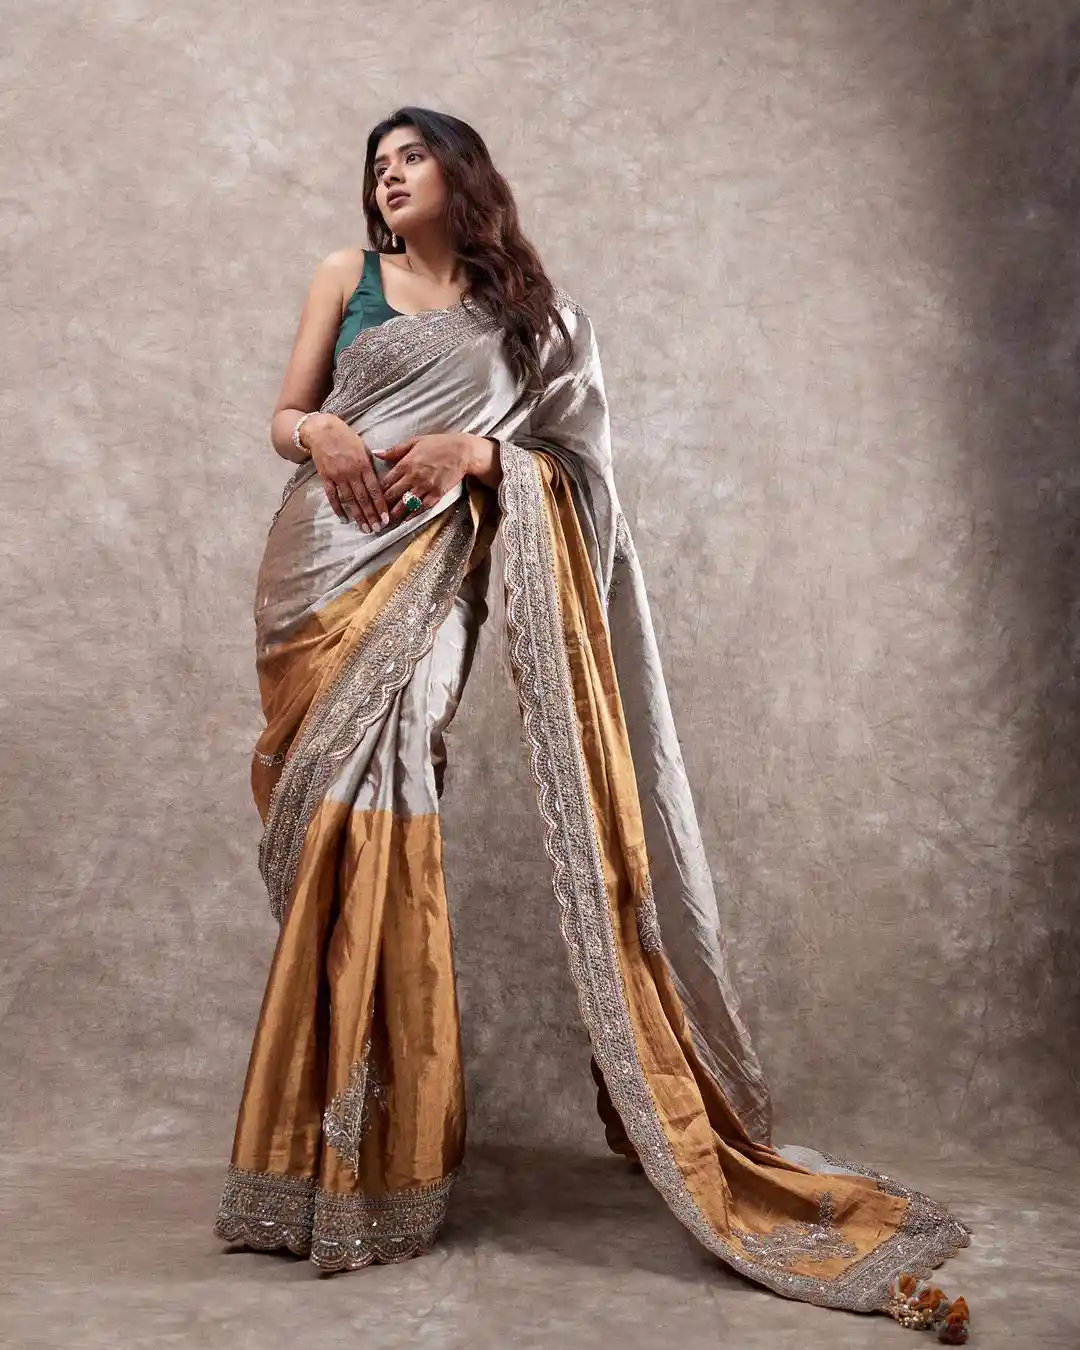 Hebah Patel latest photoshoot in saree